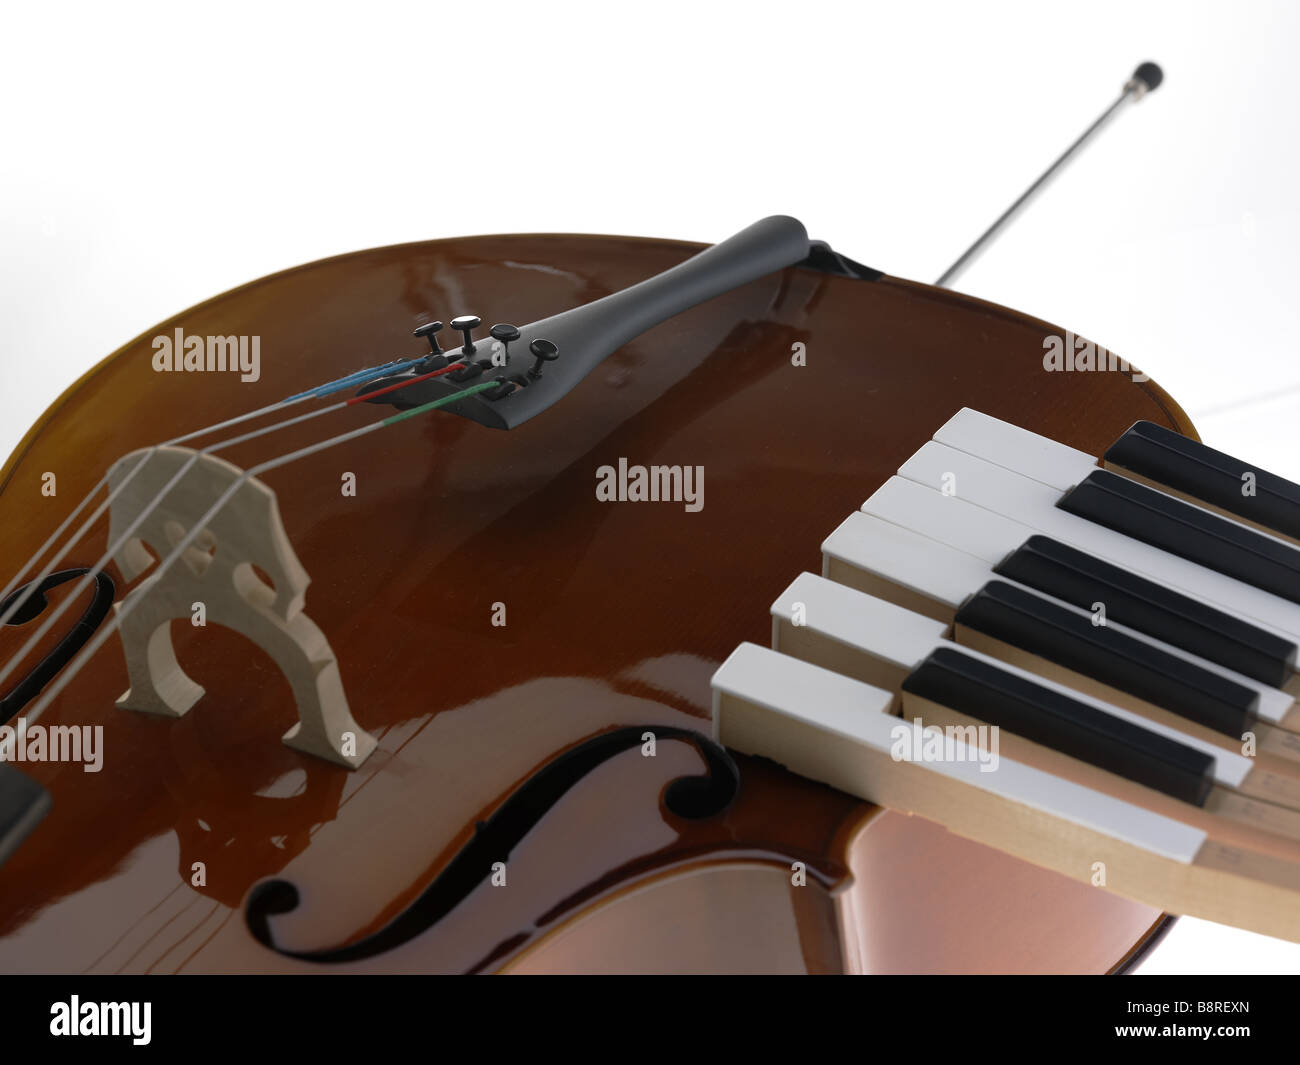 Cello, Viola, Piano, Keyboard, Music, Still Life, Instruments, Orchestra, Classic Stock Photo